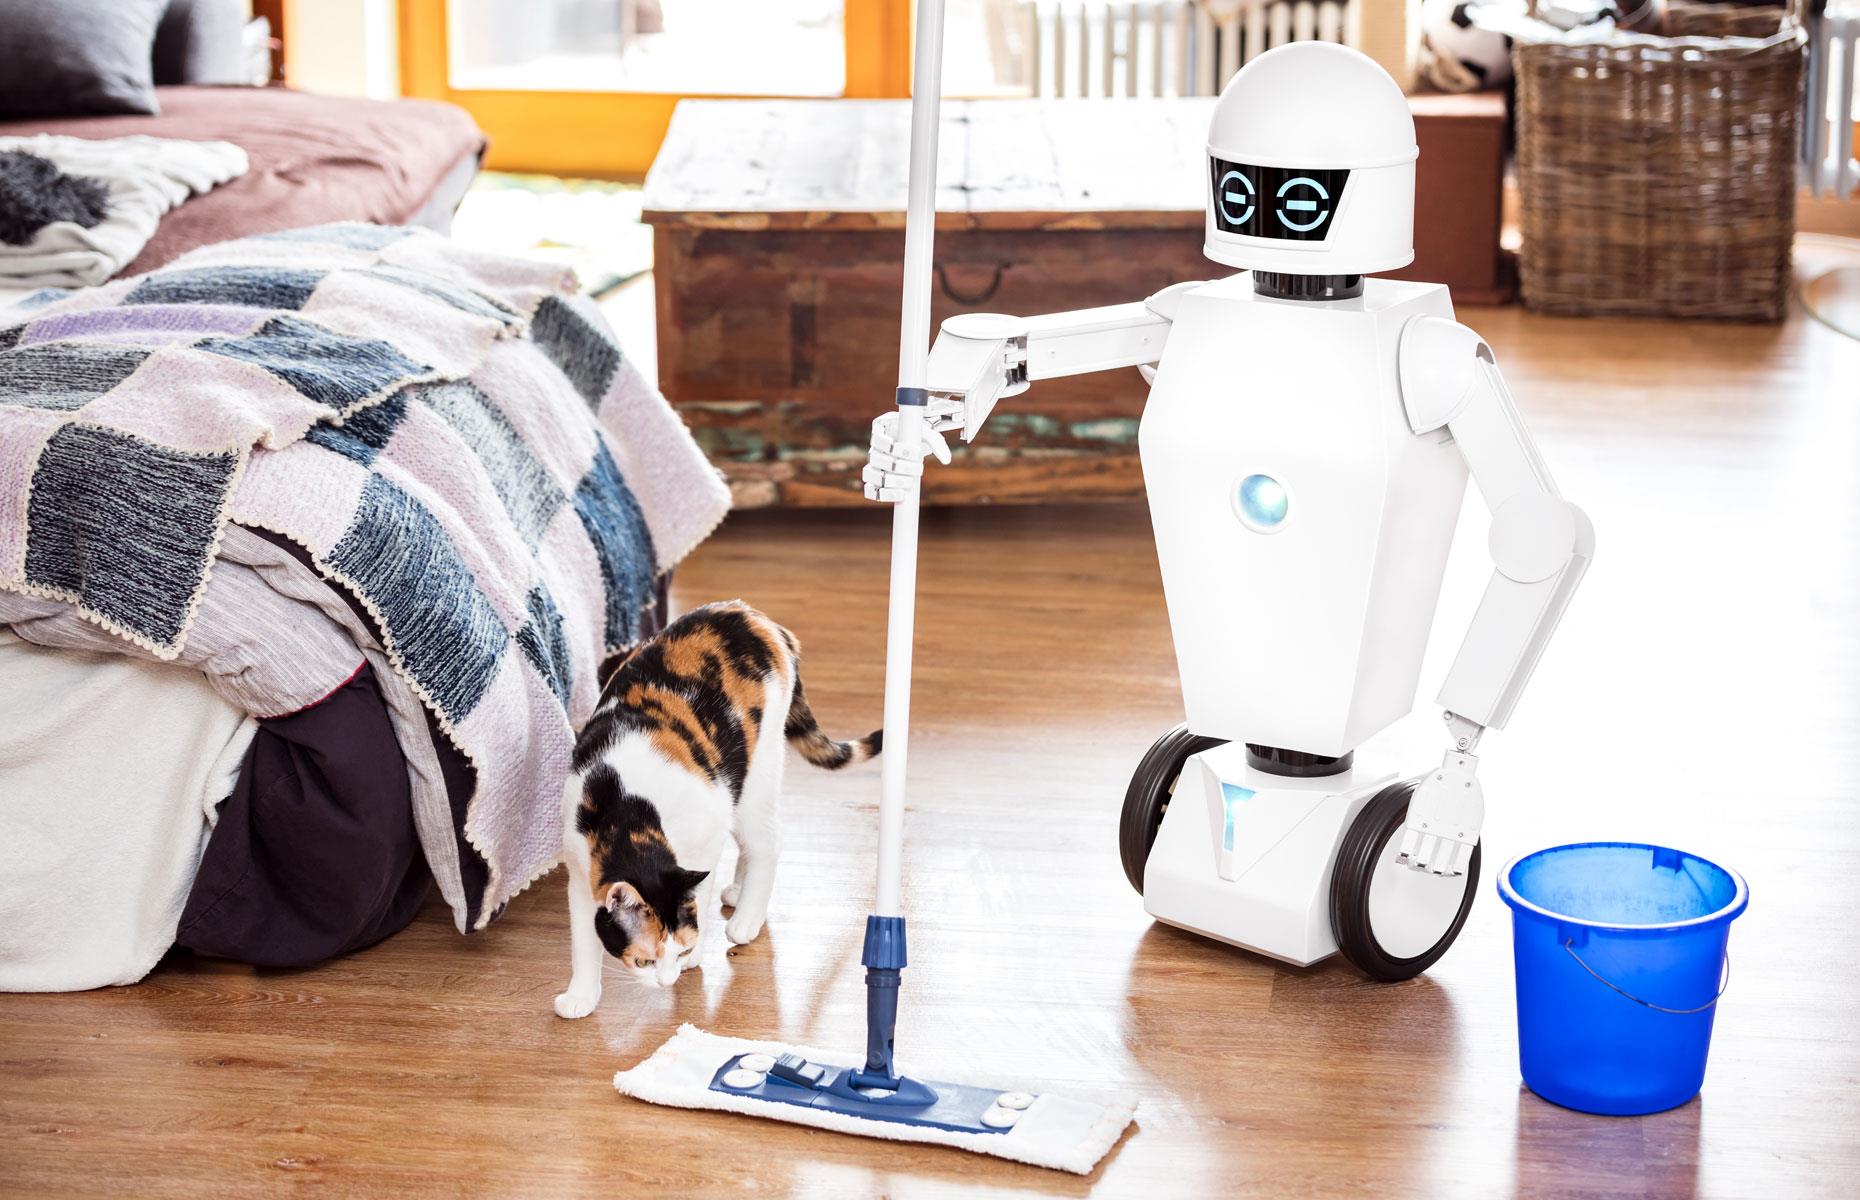 AI-powered home robots